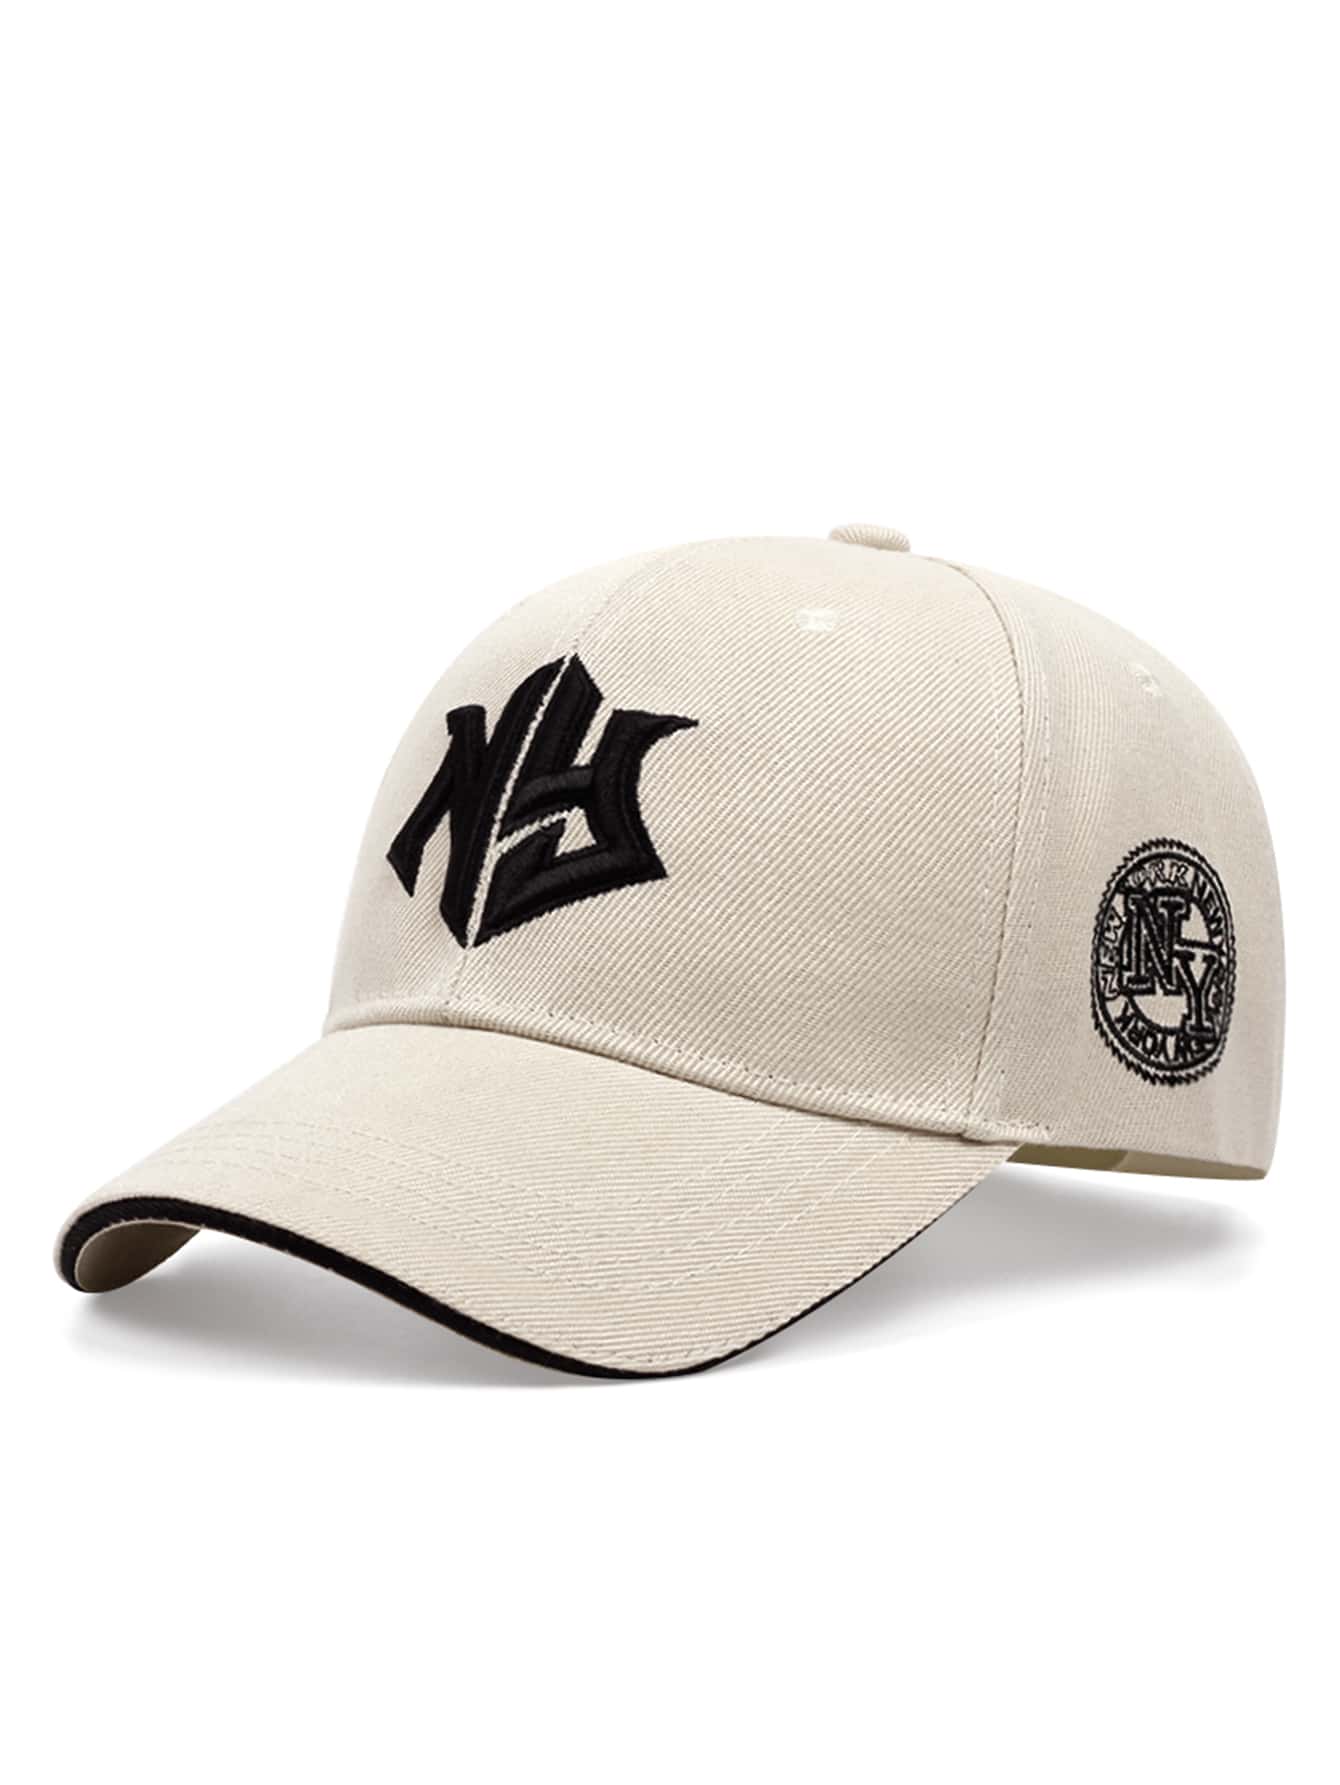 Men's NY Letter Embroidery Baseball Cap Hat 💜